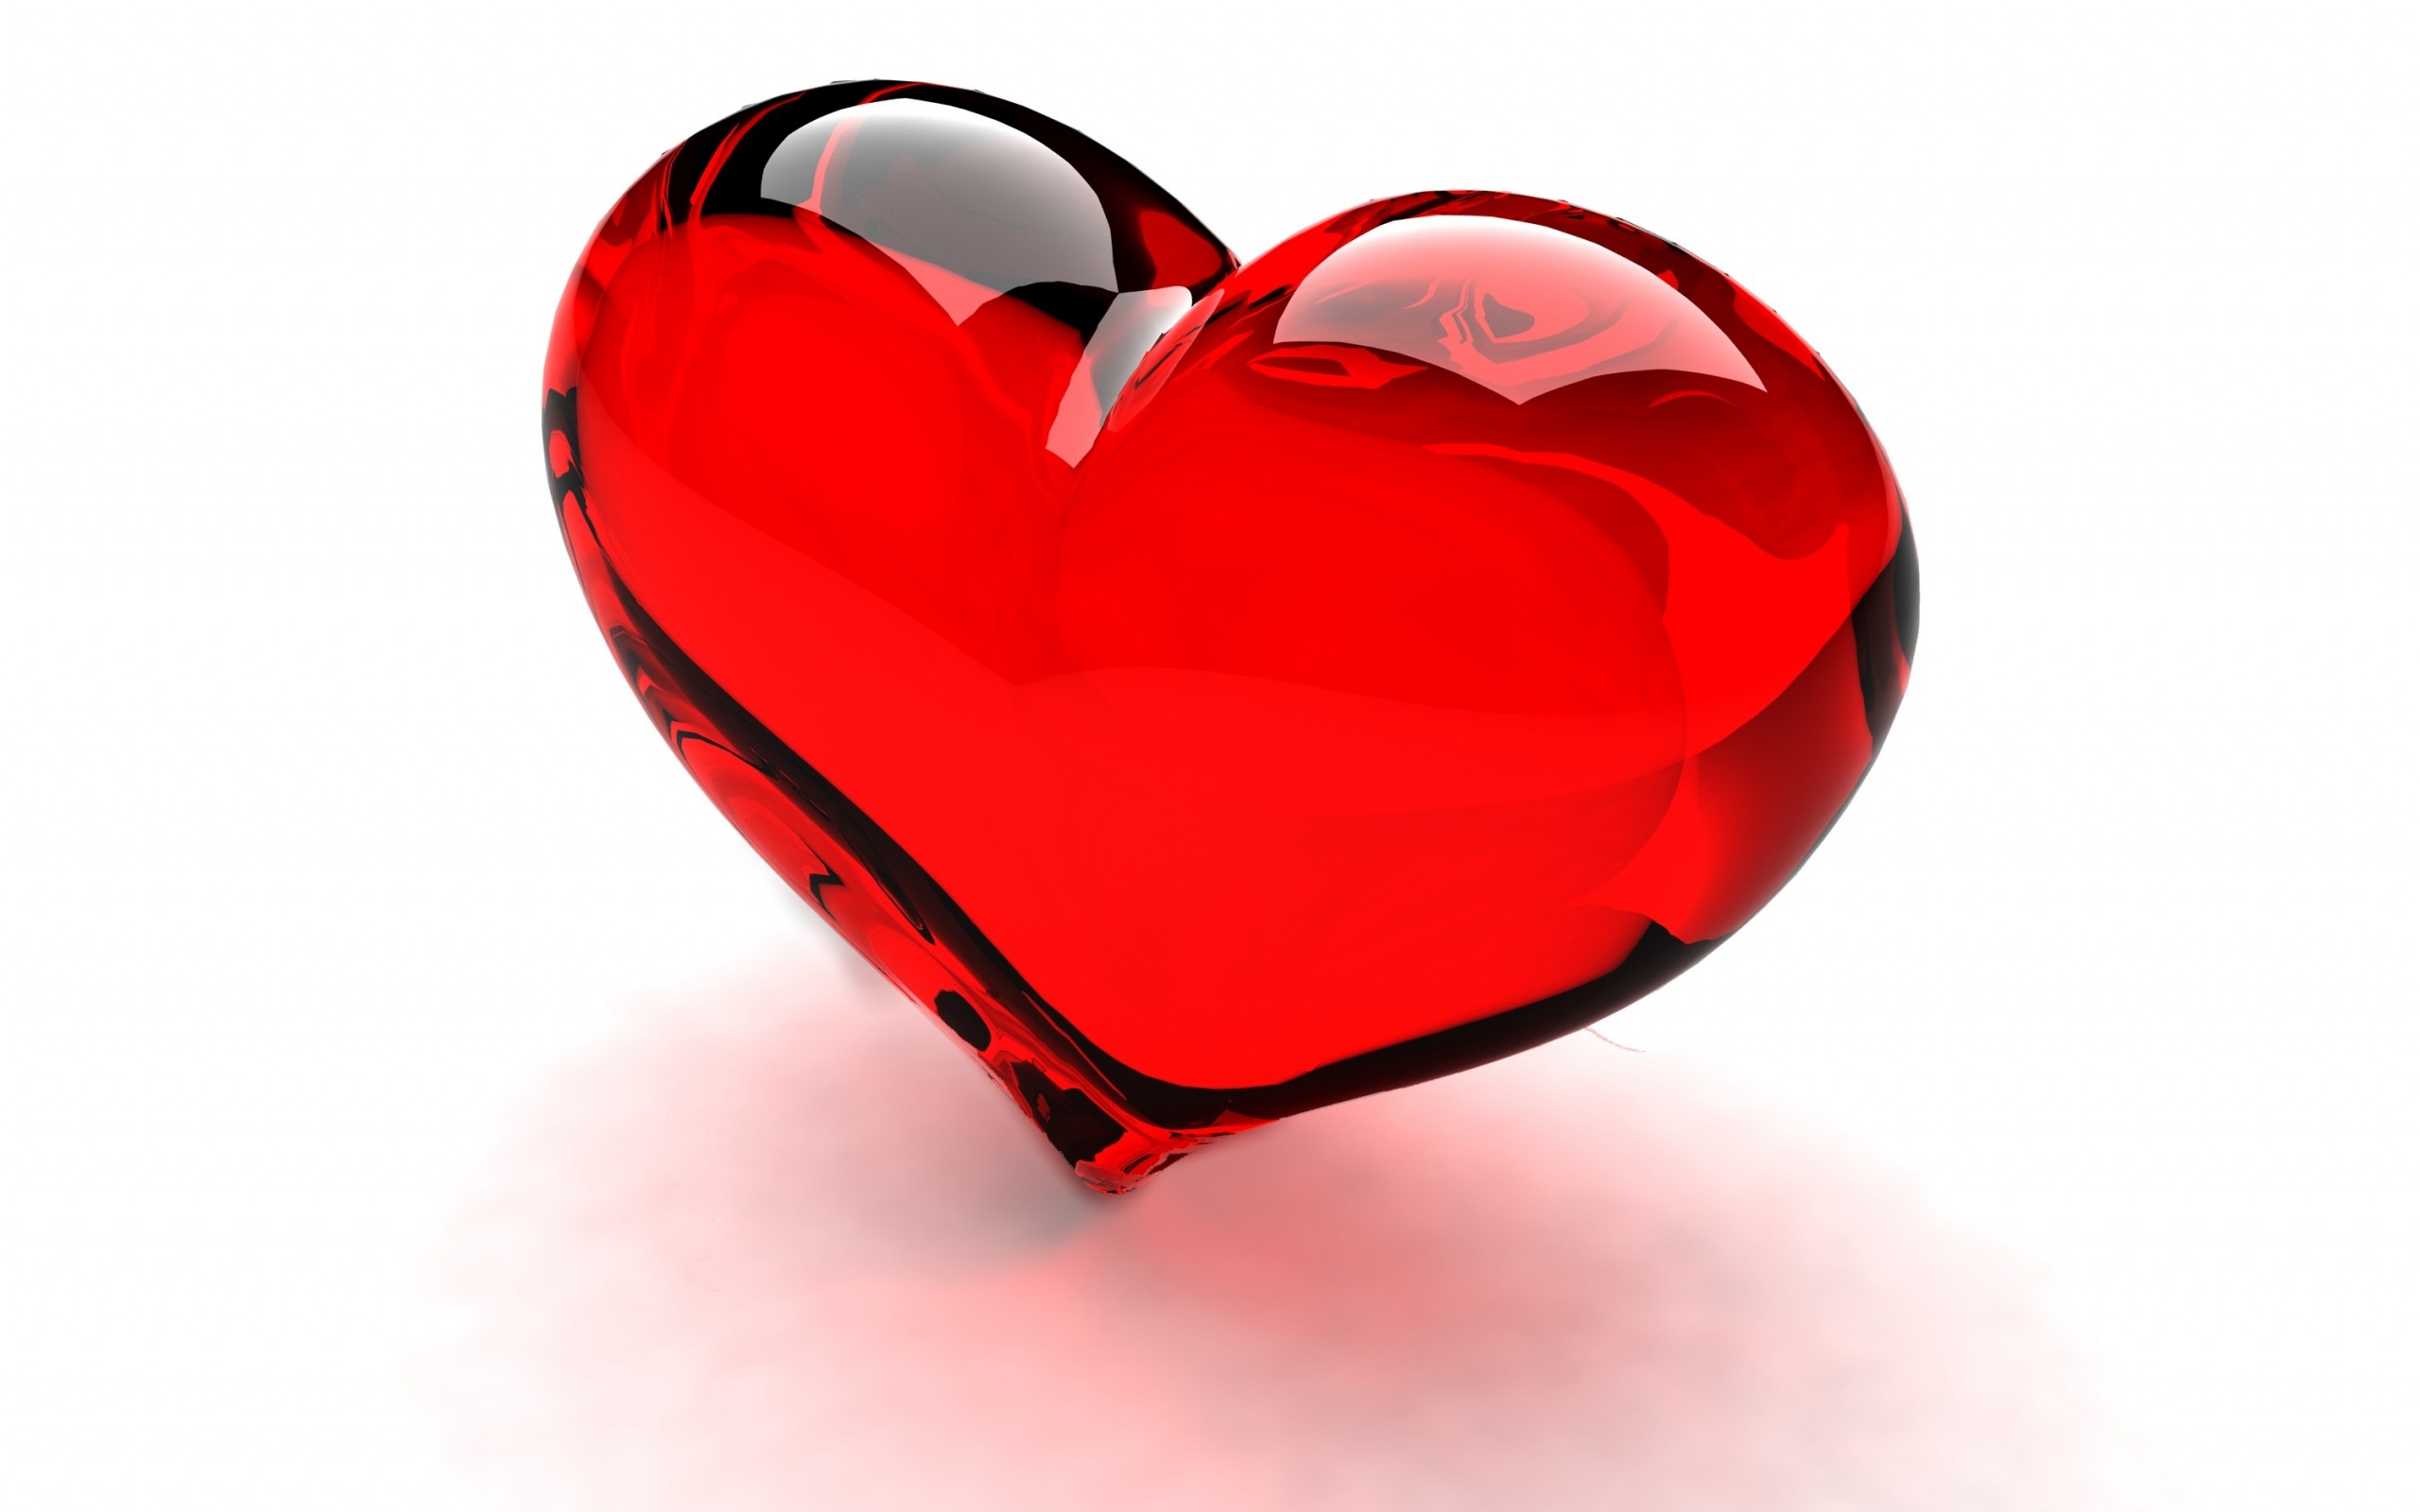 Love heart 3d clipart hd download - ClipartFox